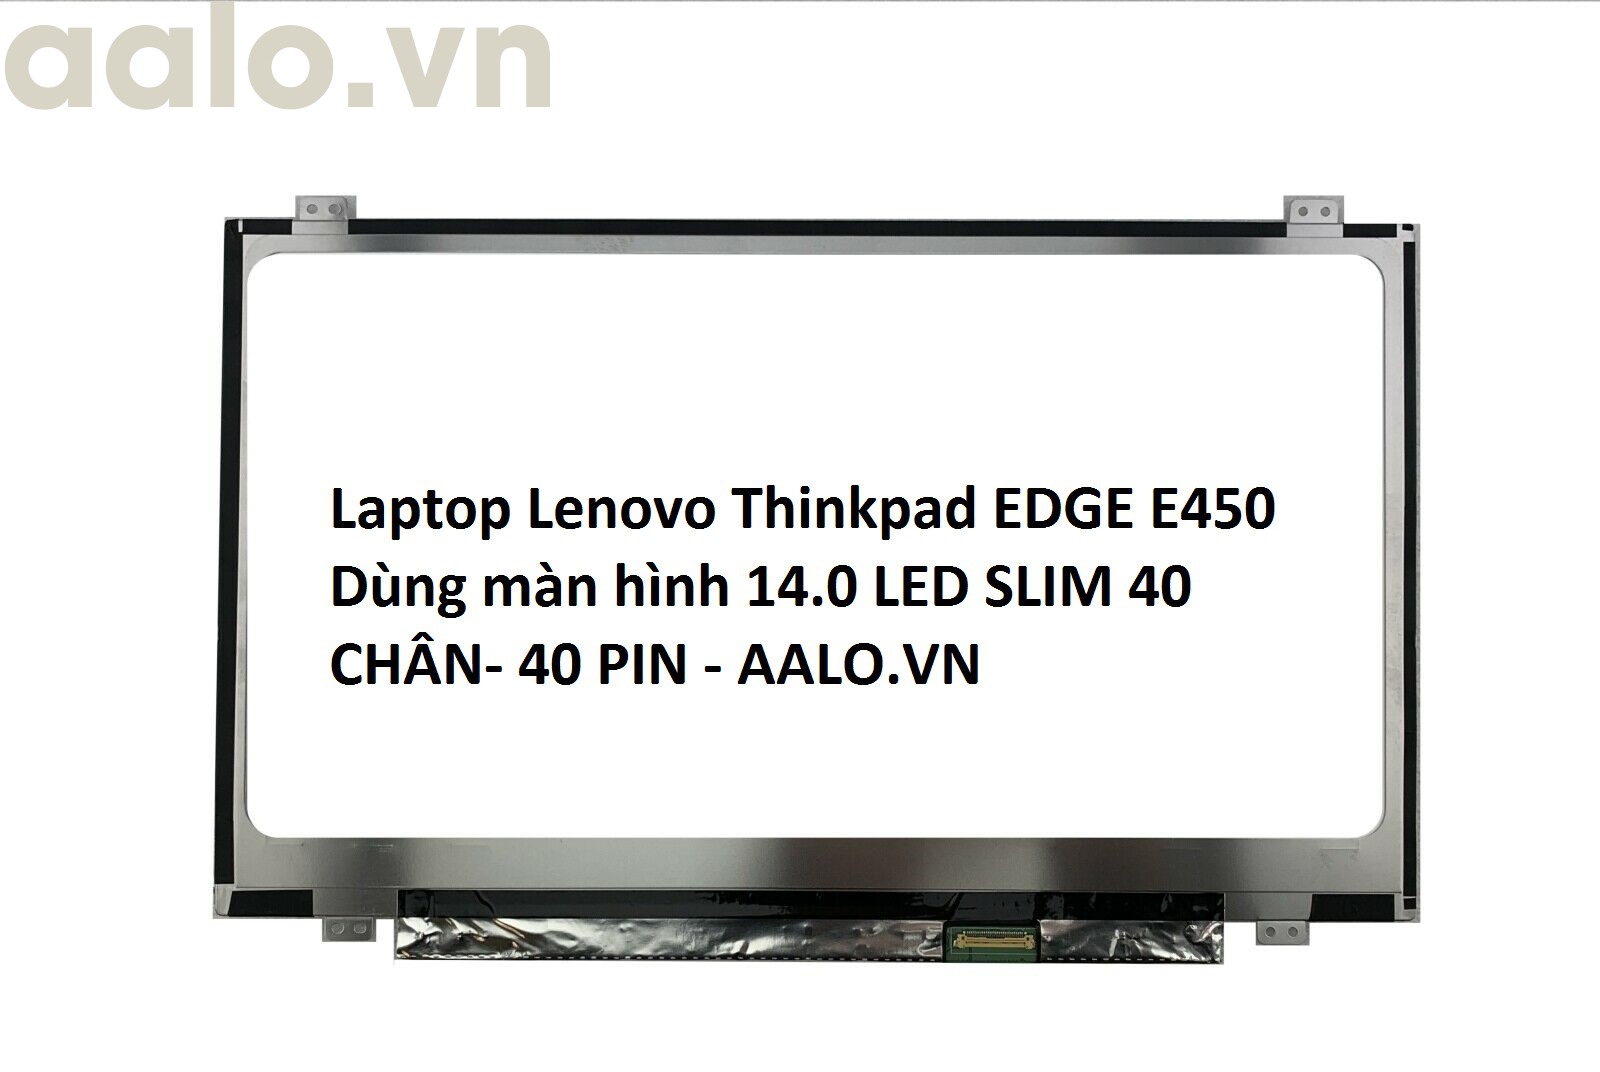 Màn hình Laptop Lenovo Thinkpad EDGE E450